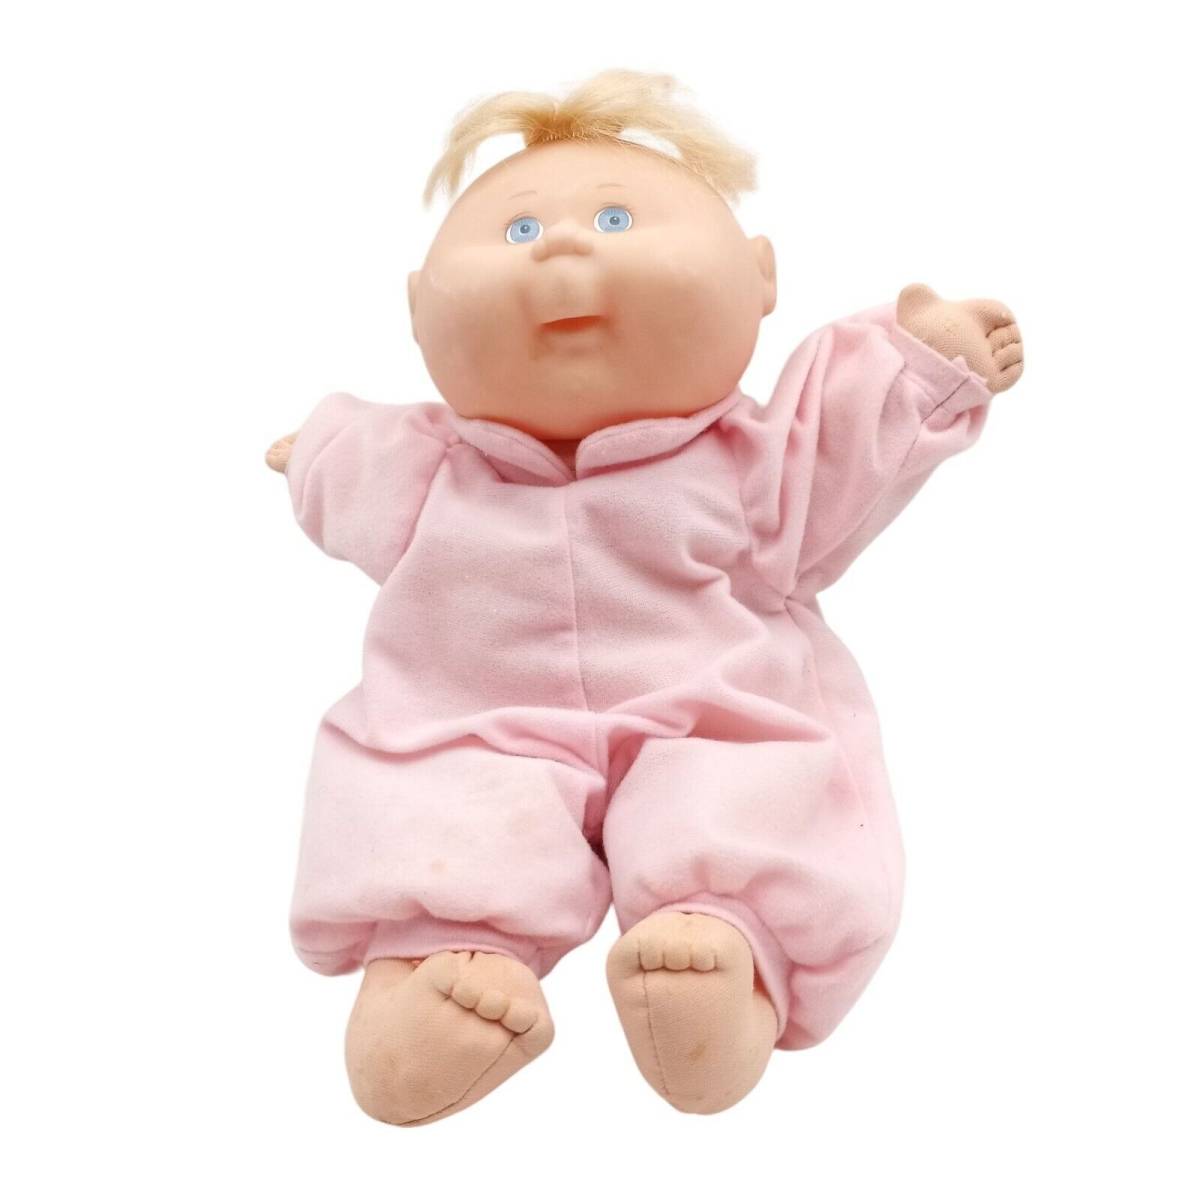 Vintage 1988 Mattel CPK Baby Doll Soft Body Blonde Hair Pink Sleepsuit 11" Tall 海外 即決